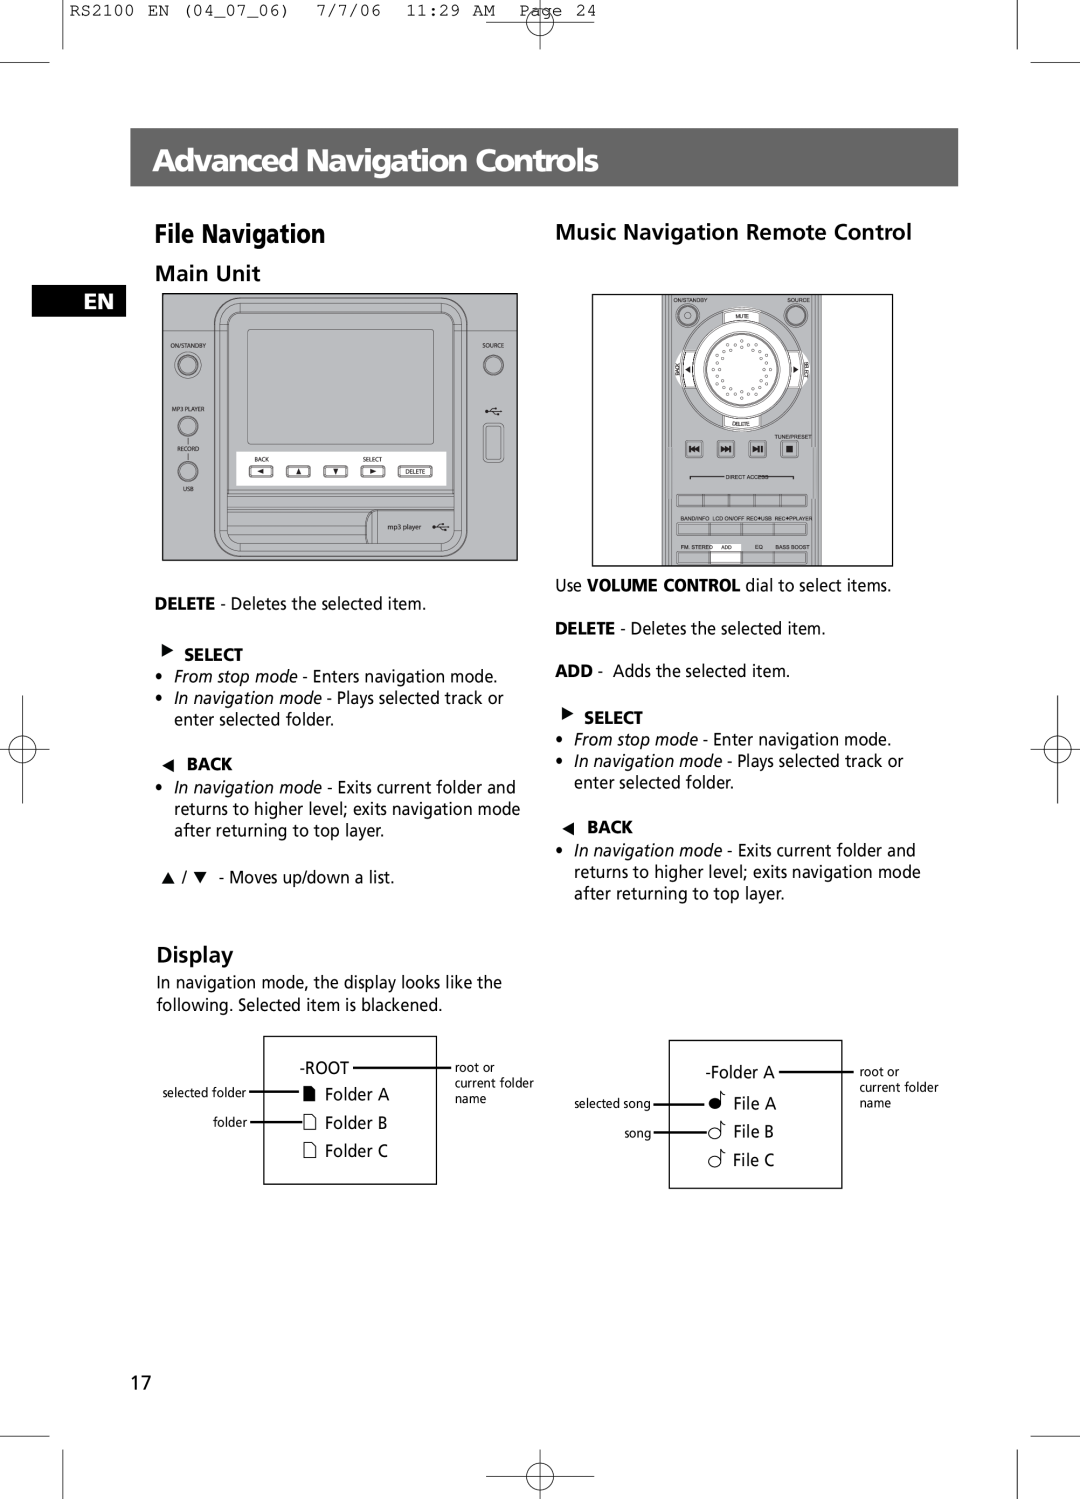 RCA RS2100 user manual Advanced Navigation Controls, File Navigation 